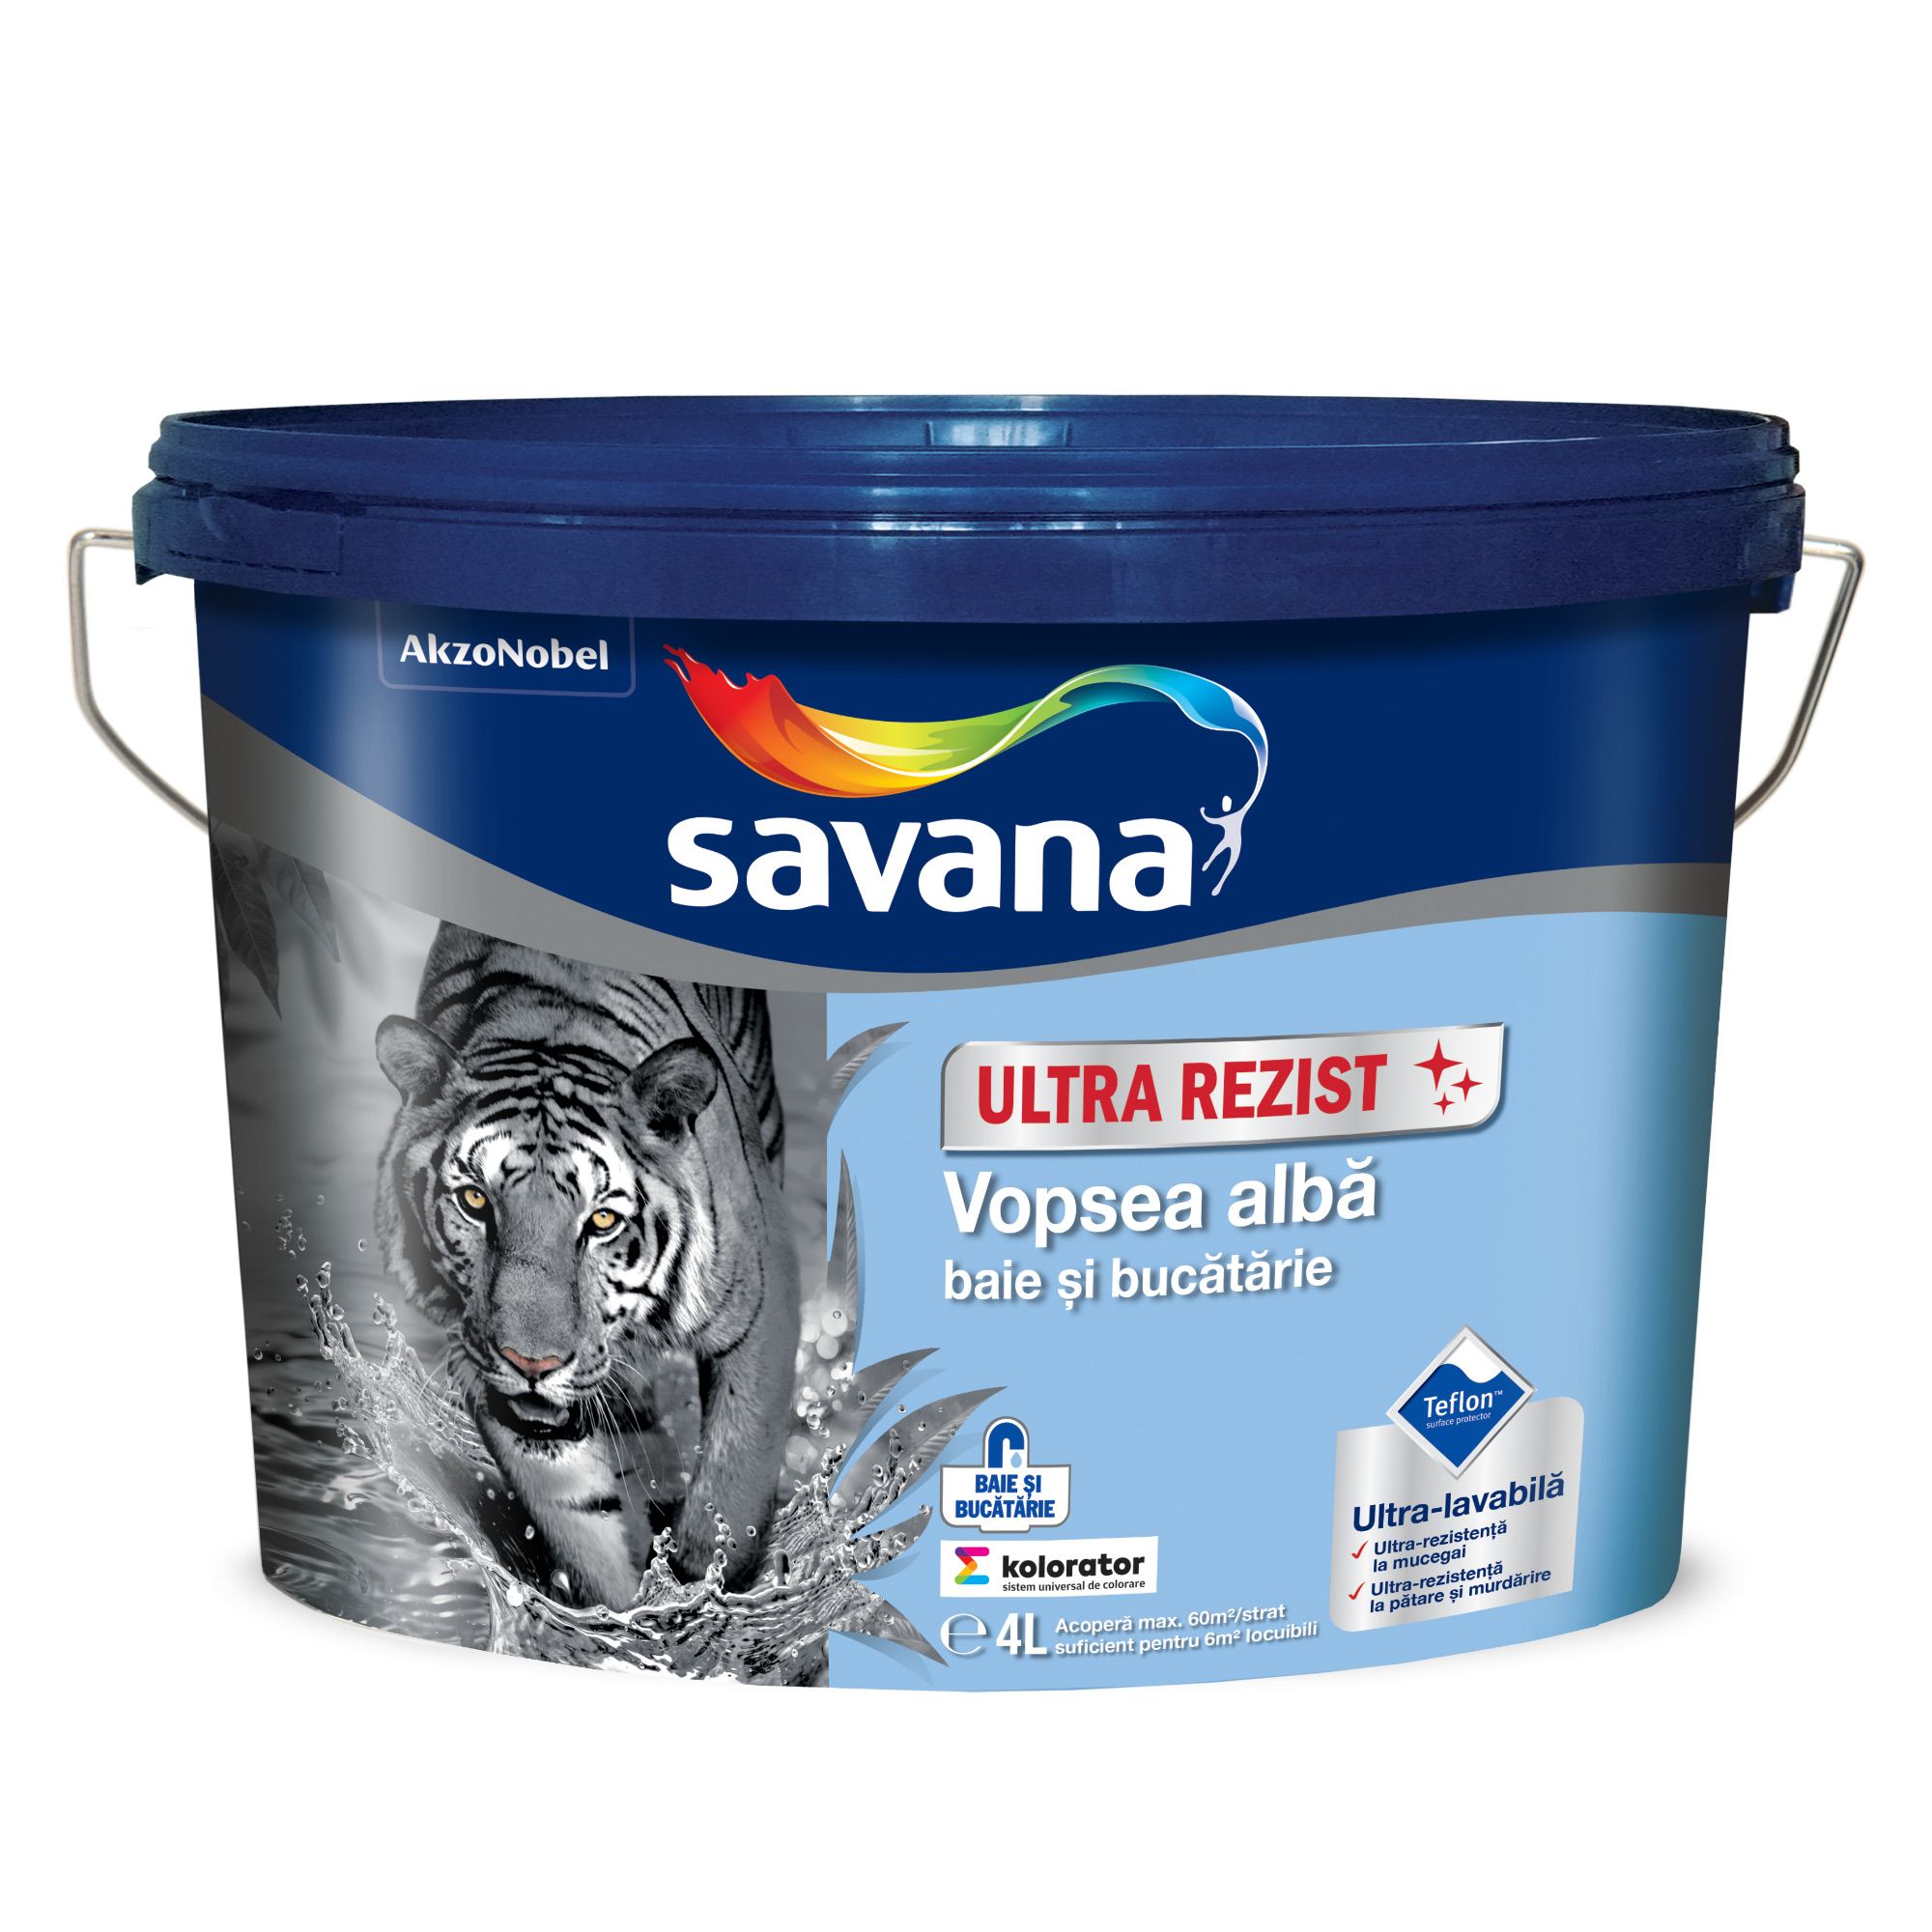 Paints - White washable paint with Teflon for bathroom and kitchen Savana UltraRezist 4L, https:maxbau.ro